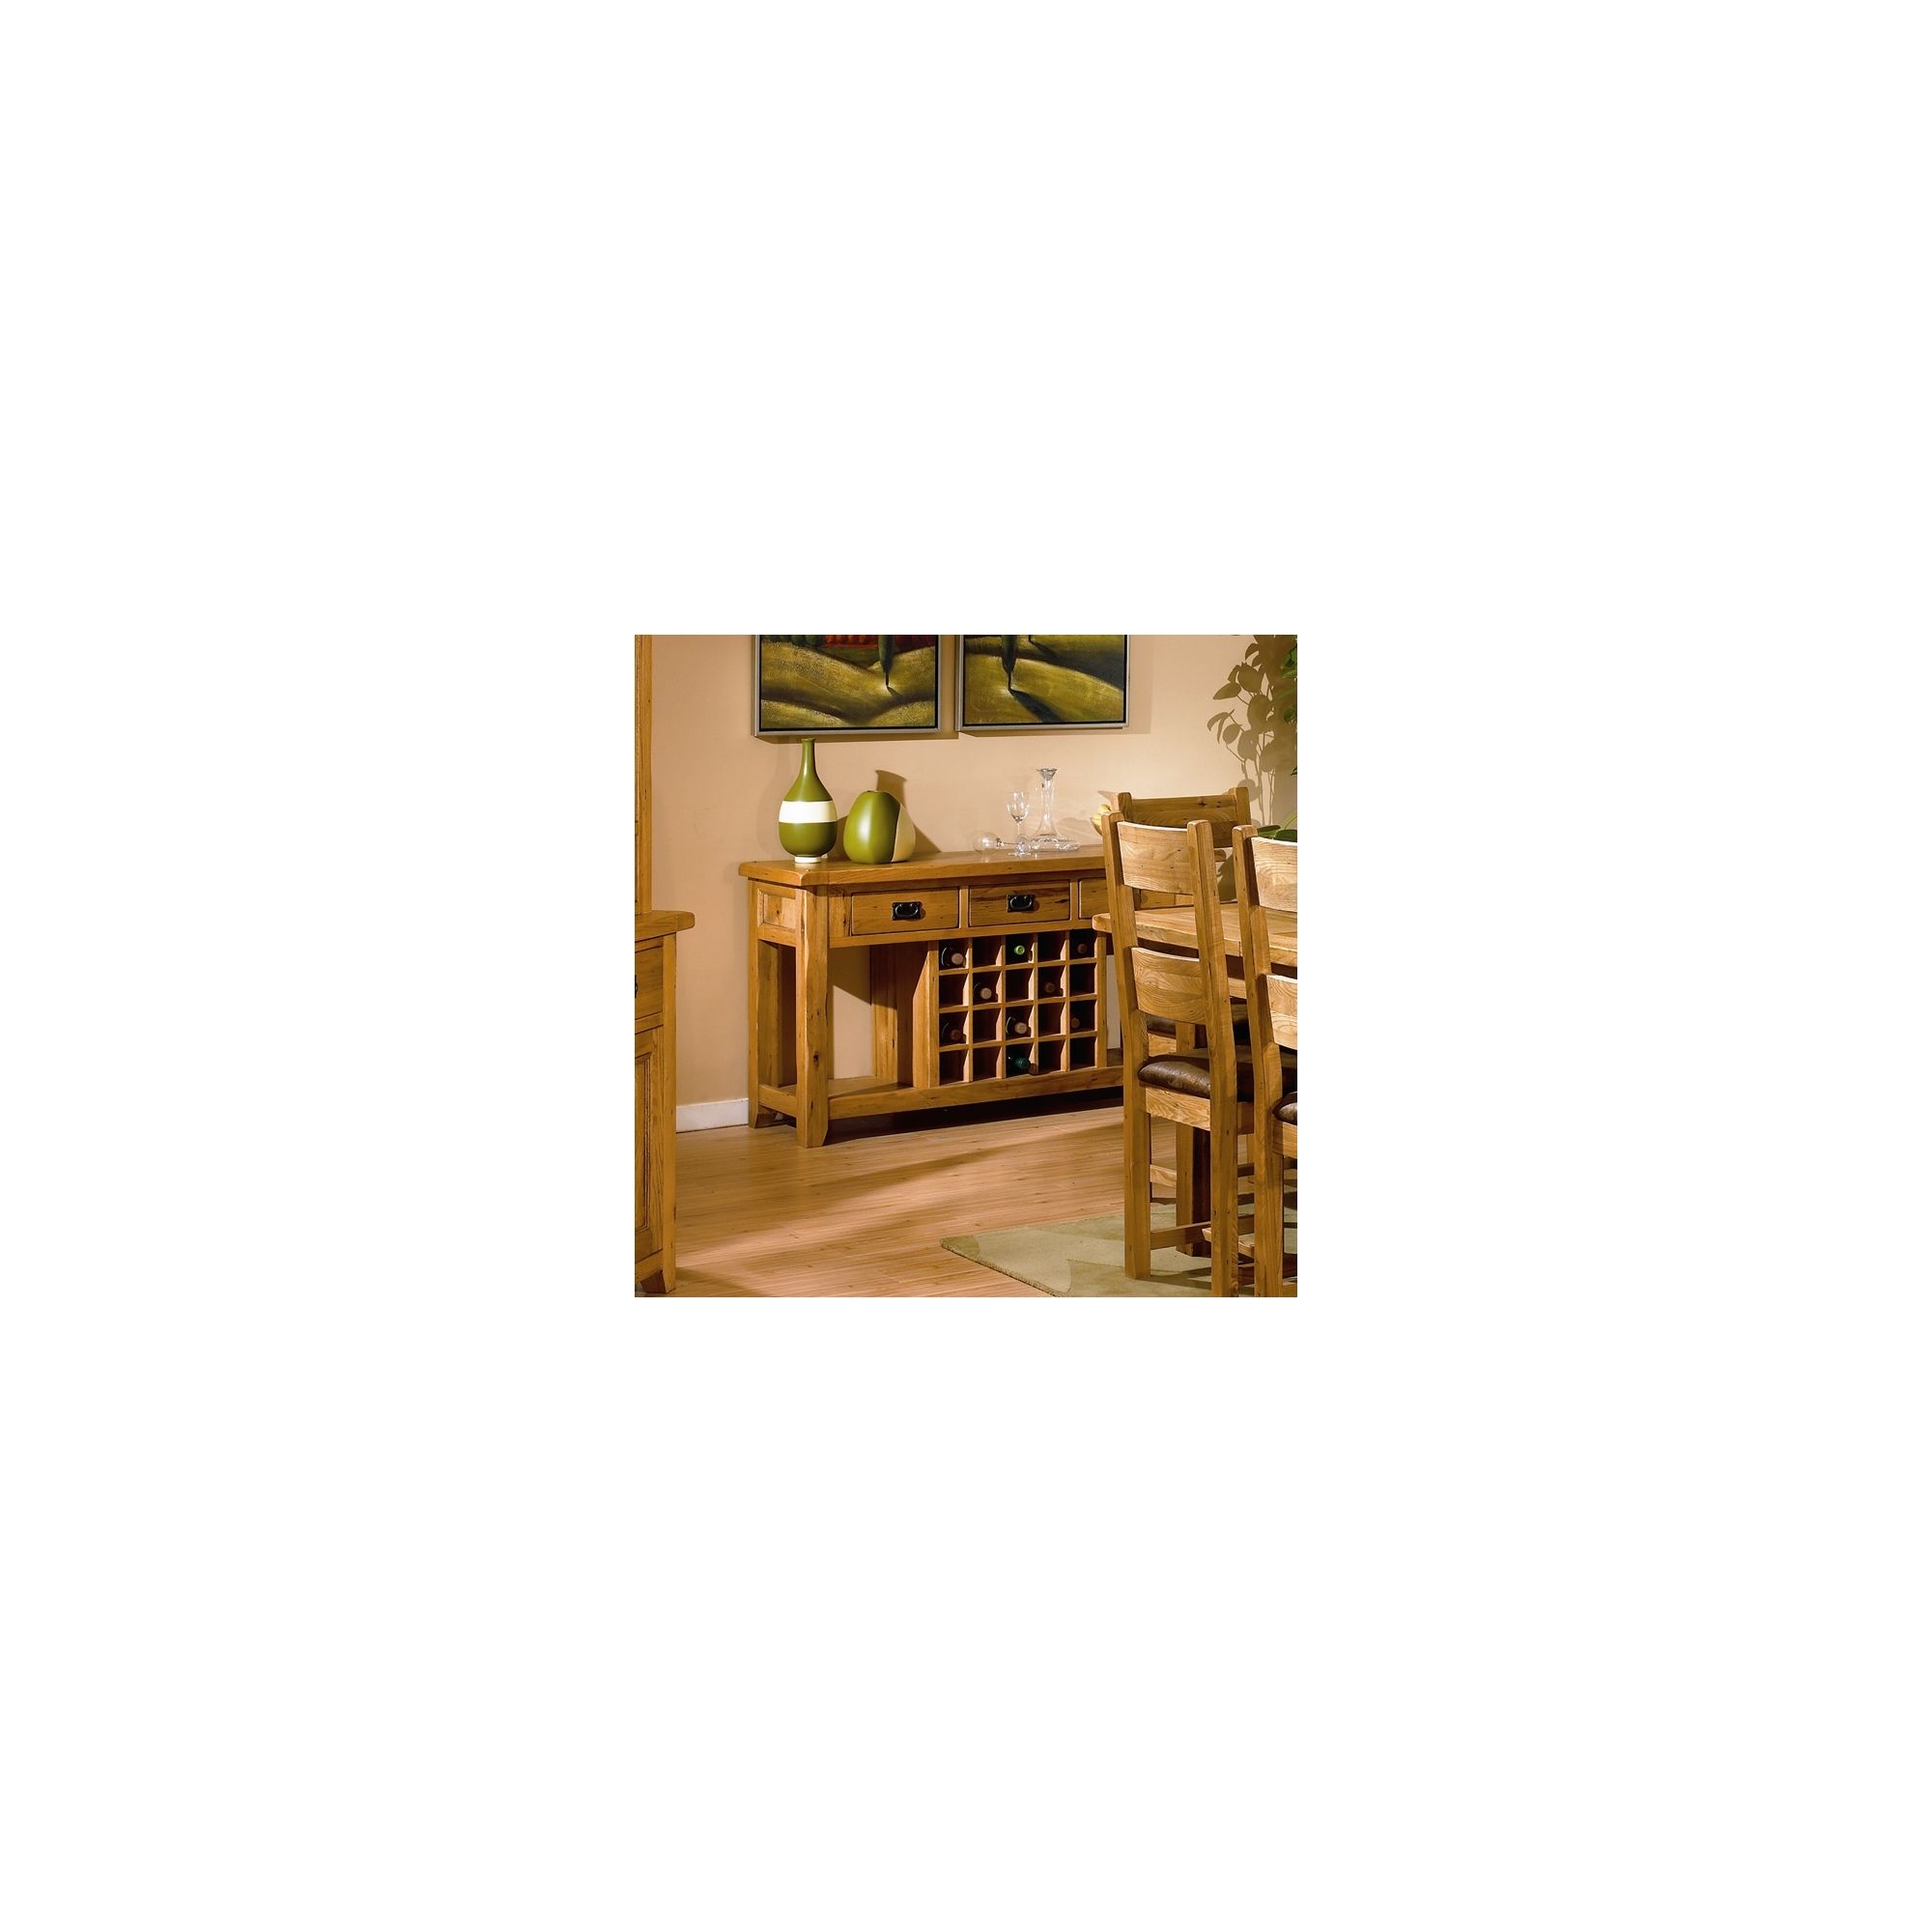 Alterton Furniture Louisiana Oak 3 Drawer Console Table at Tesco Direct